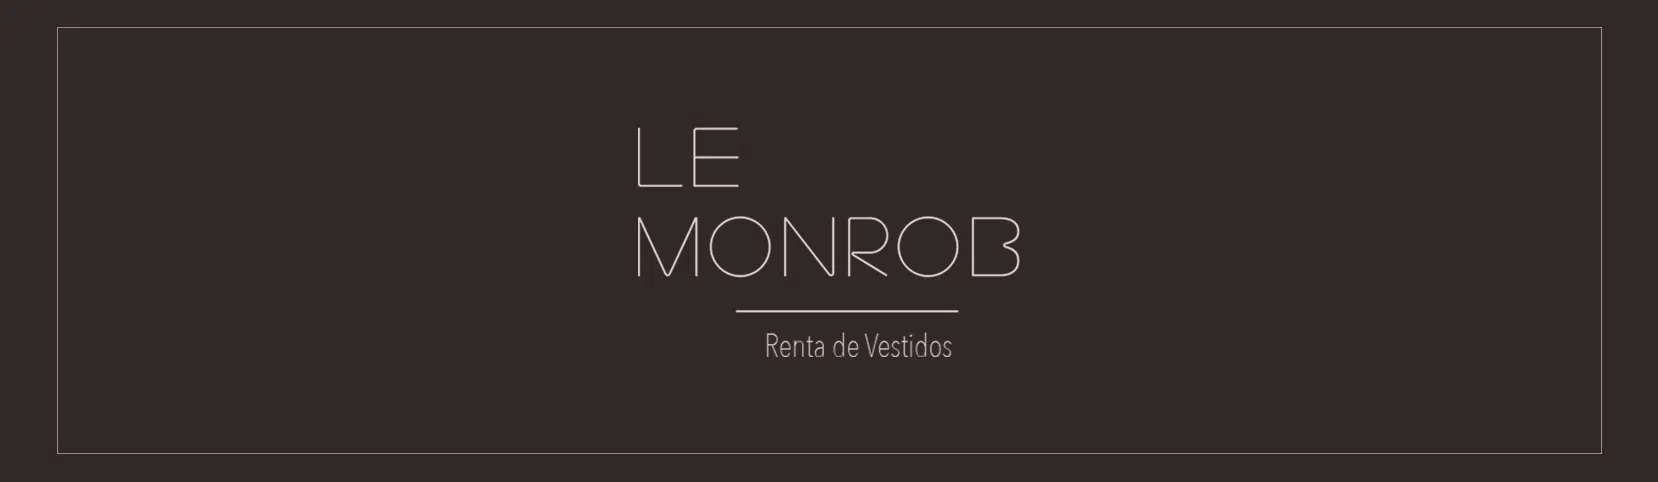 mambo agencia creativa le monrob logo